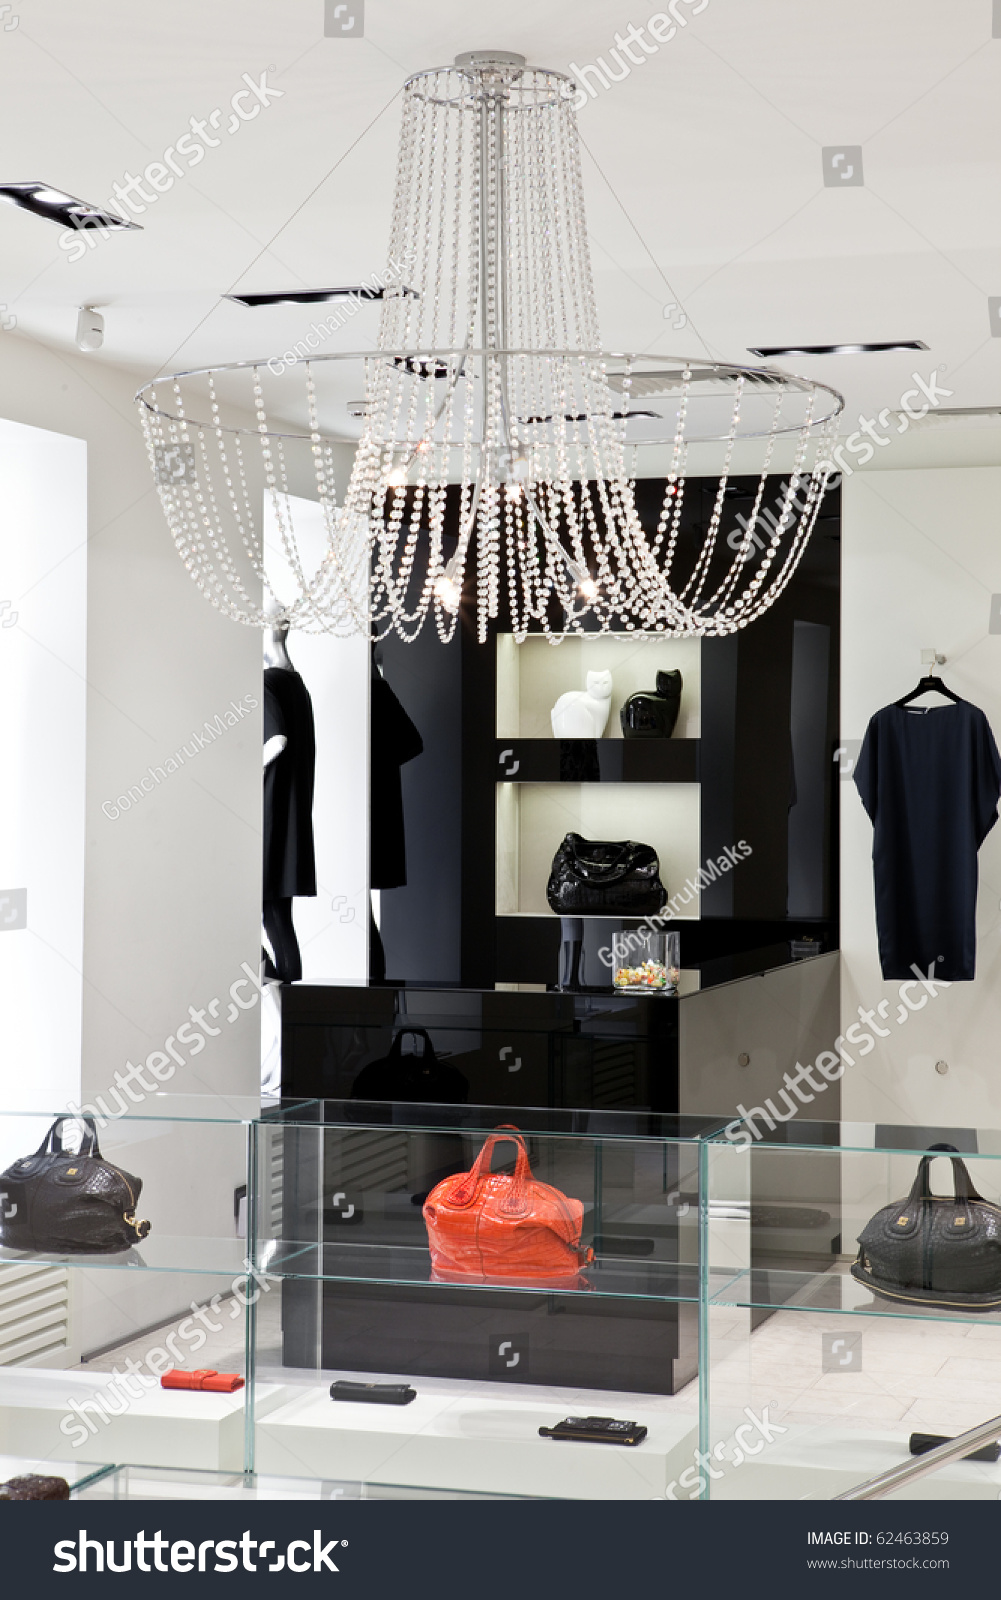 Clothing Store Interior Stock Photo 62463859 : Shutterstock